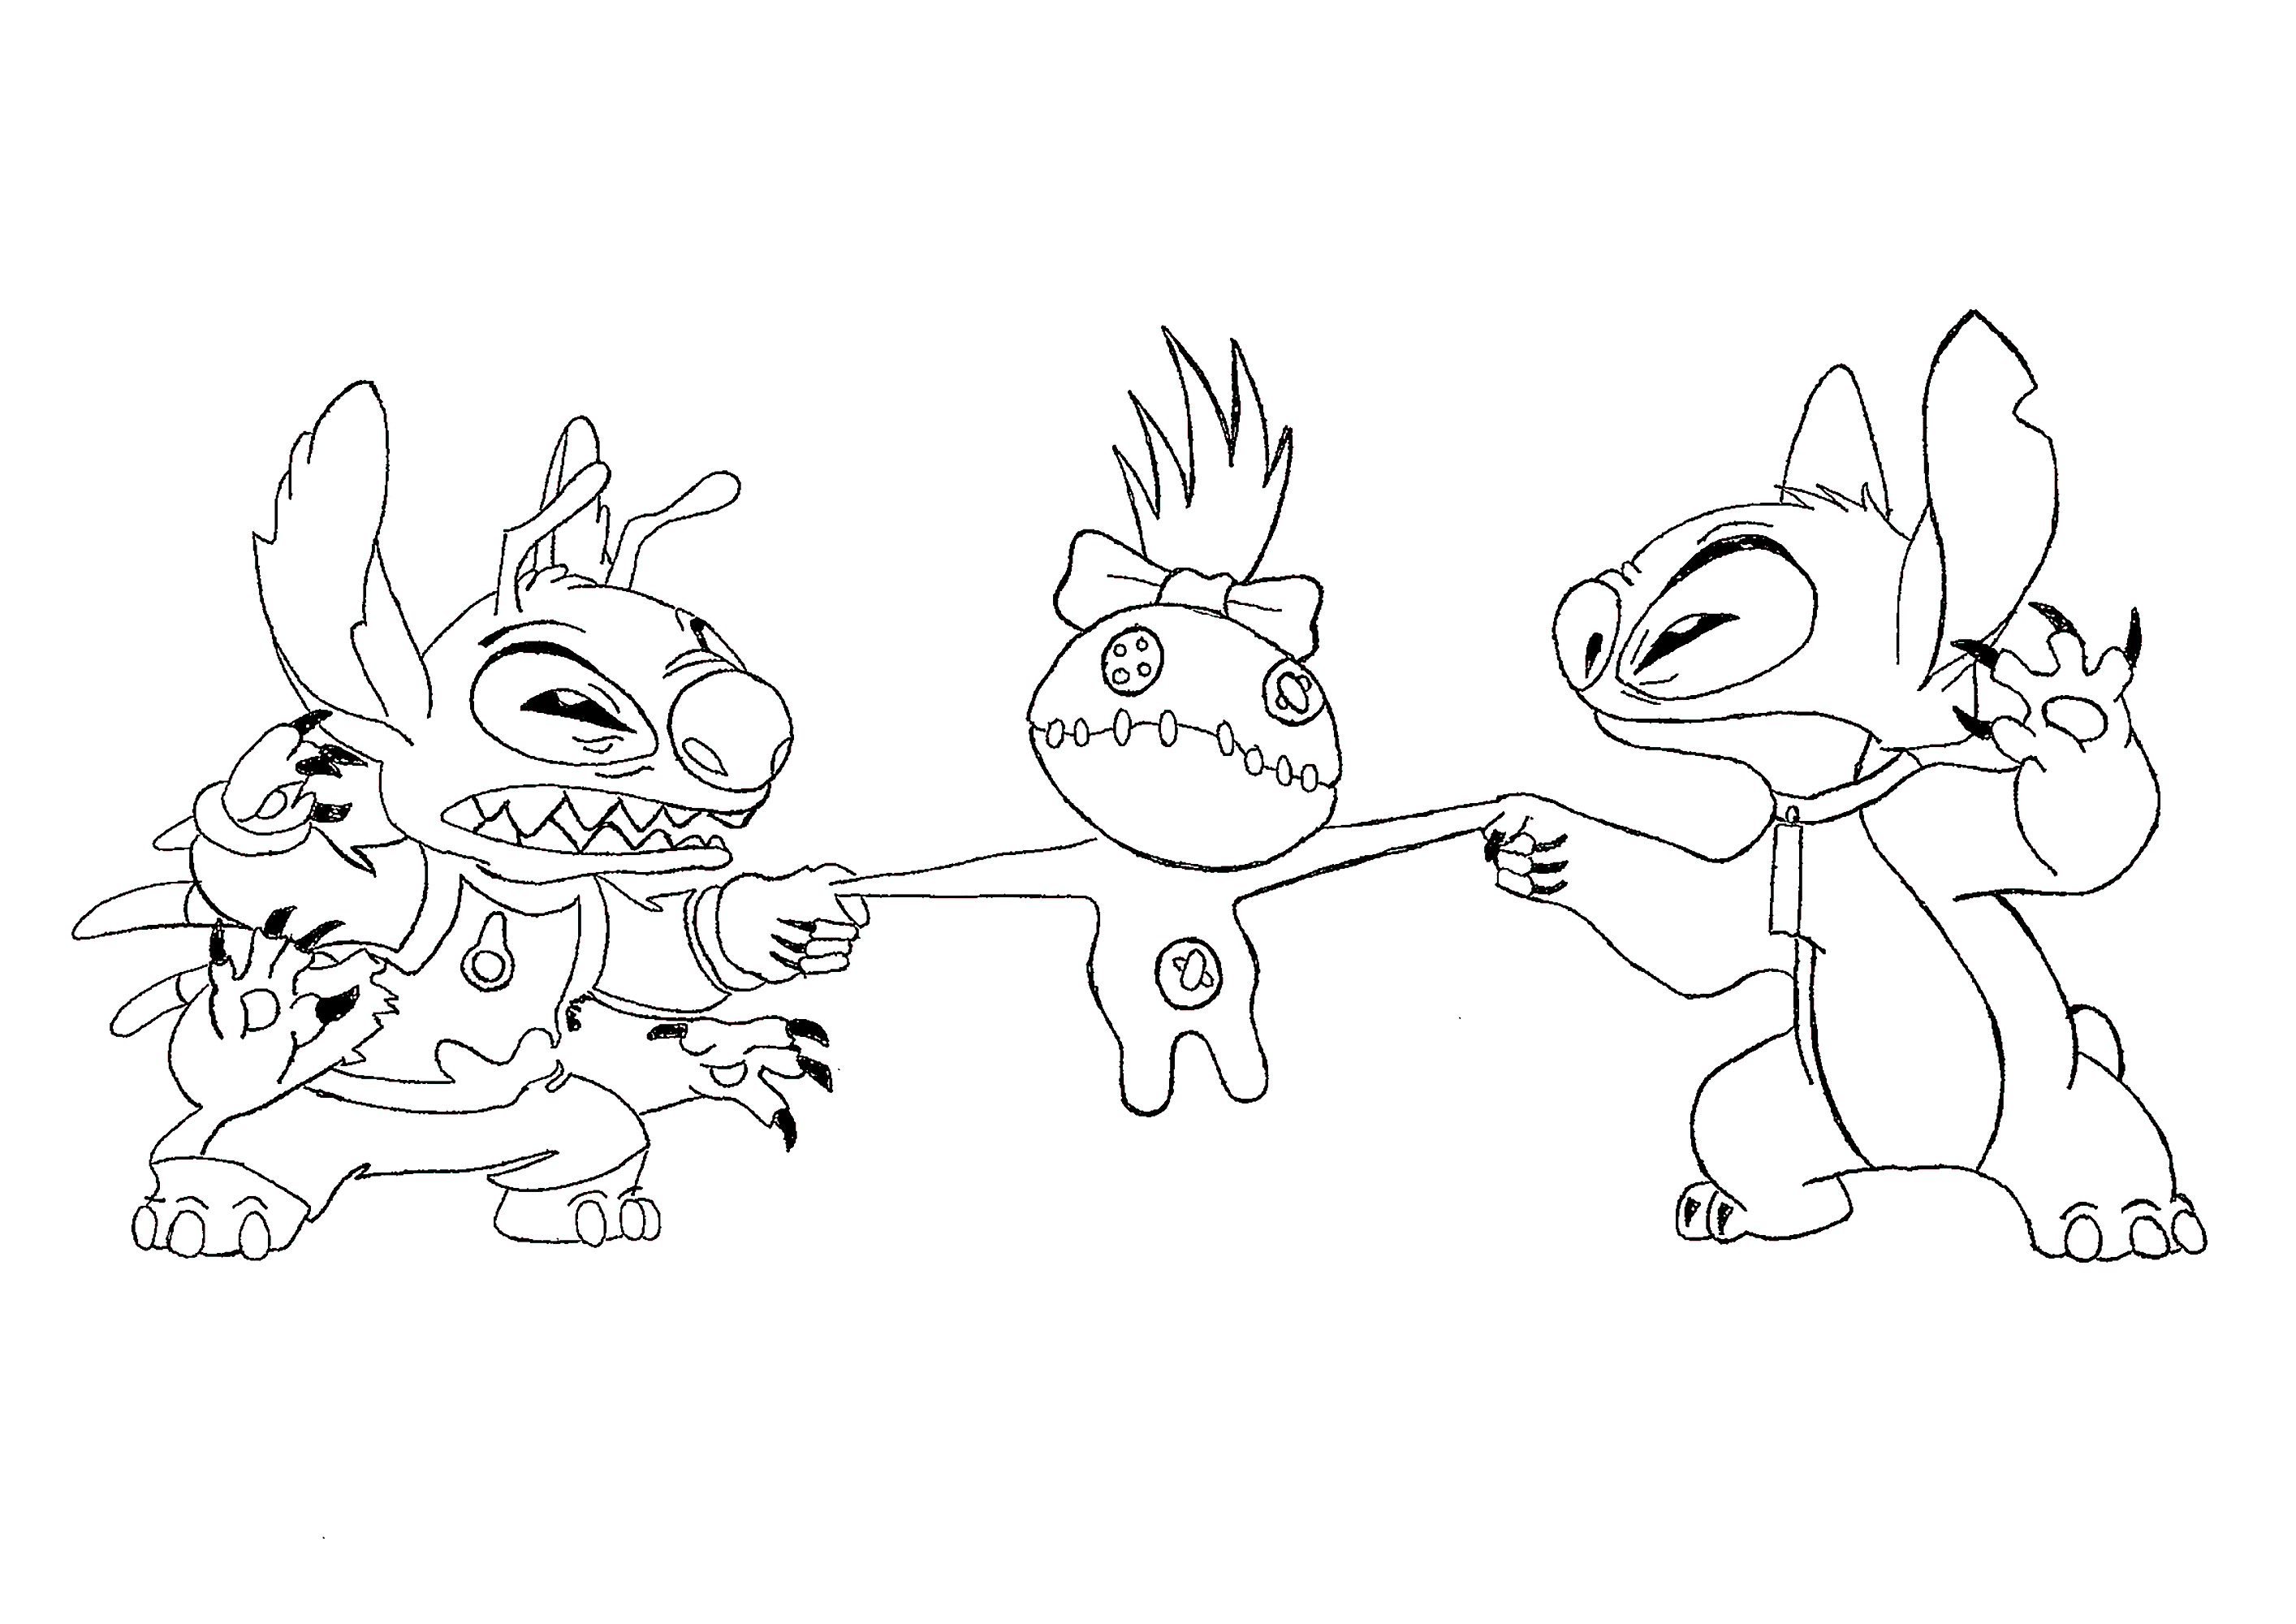 Leroy vs Stitch. (Based on a drawing by Dutchgirl626 on Deviant. Art)